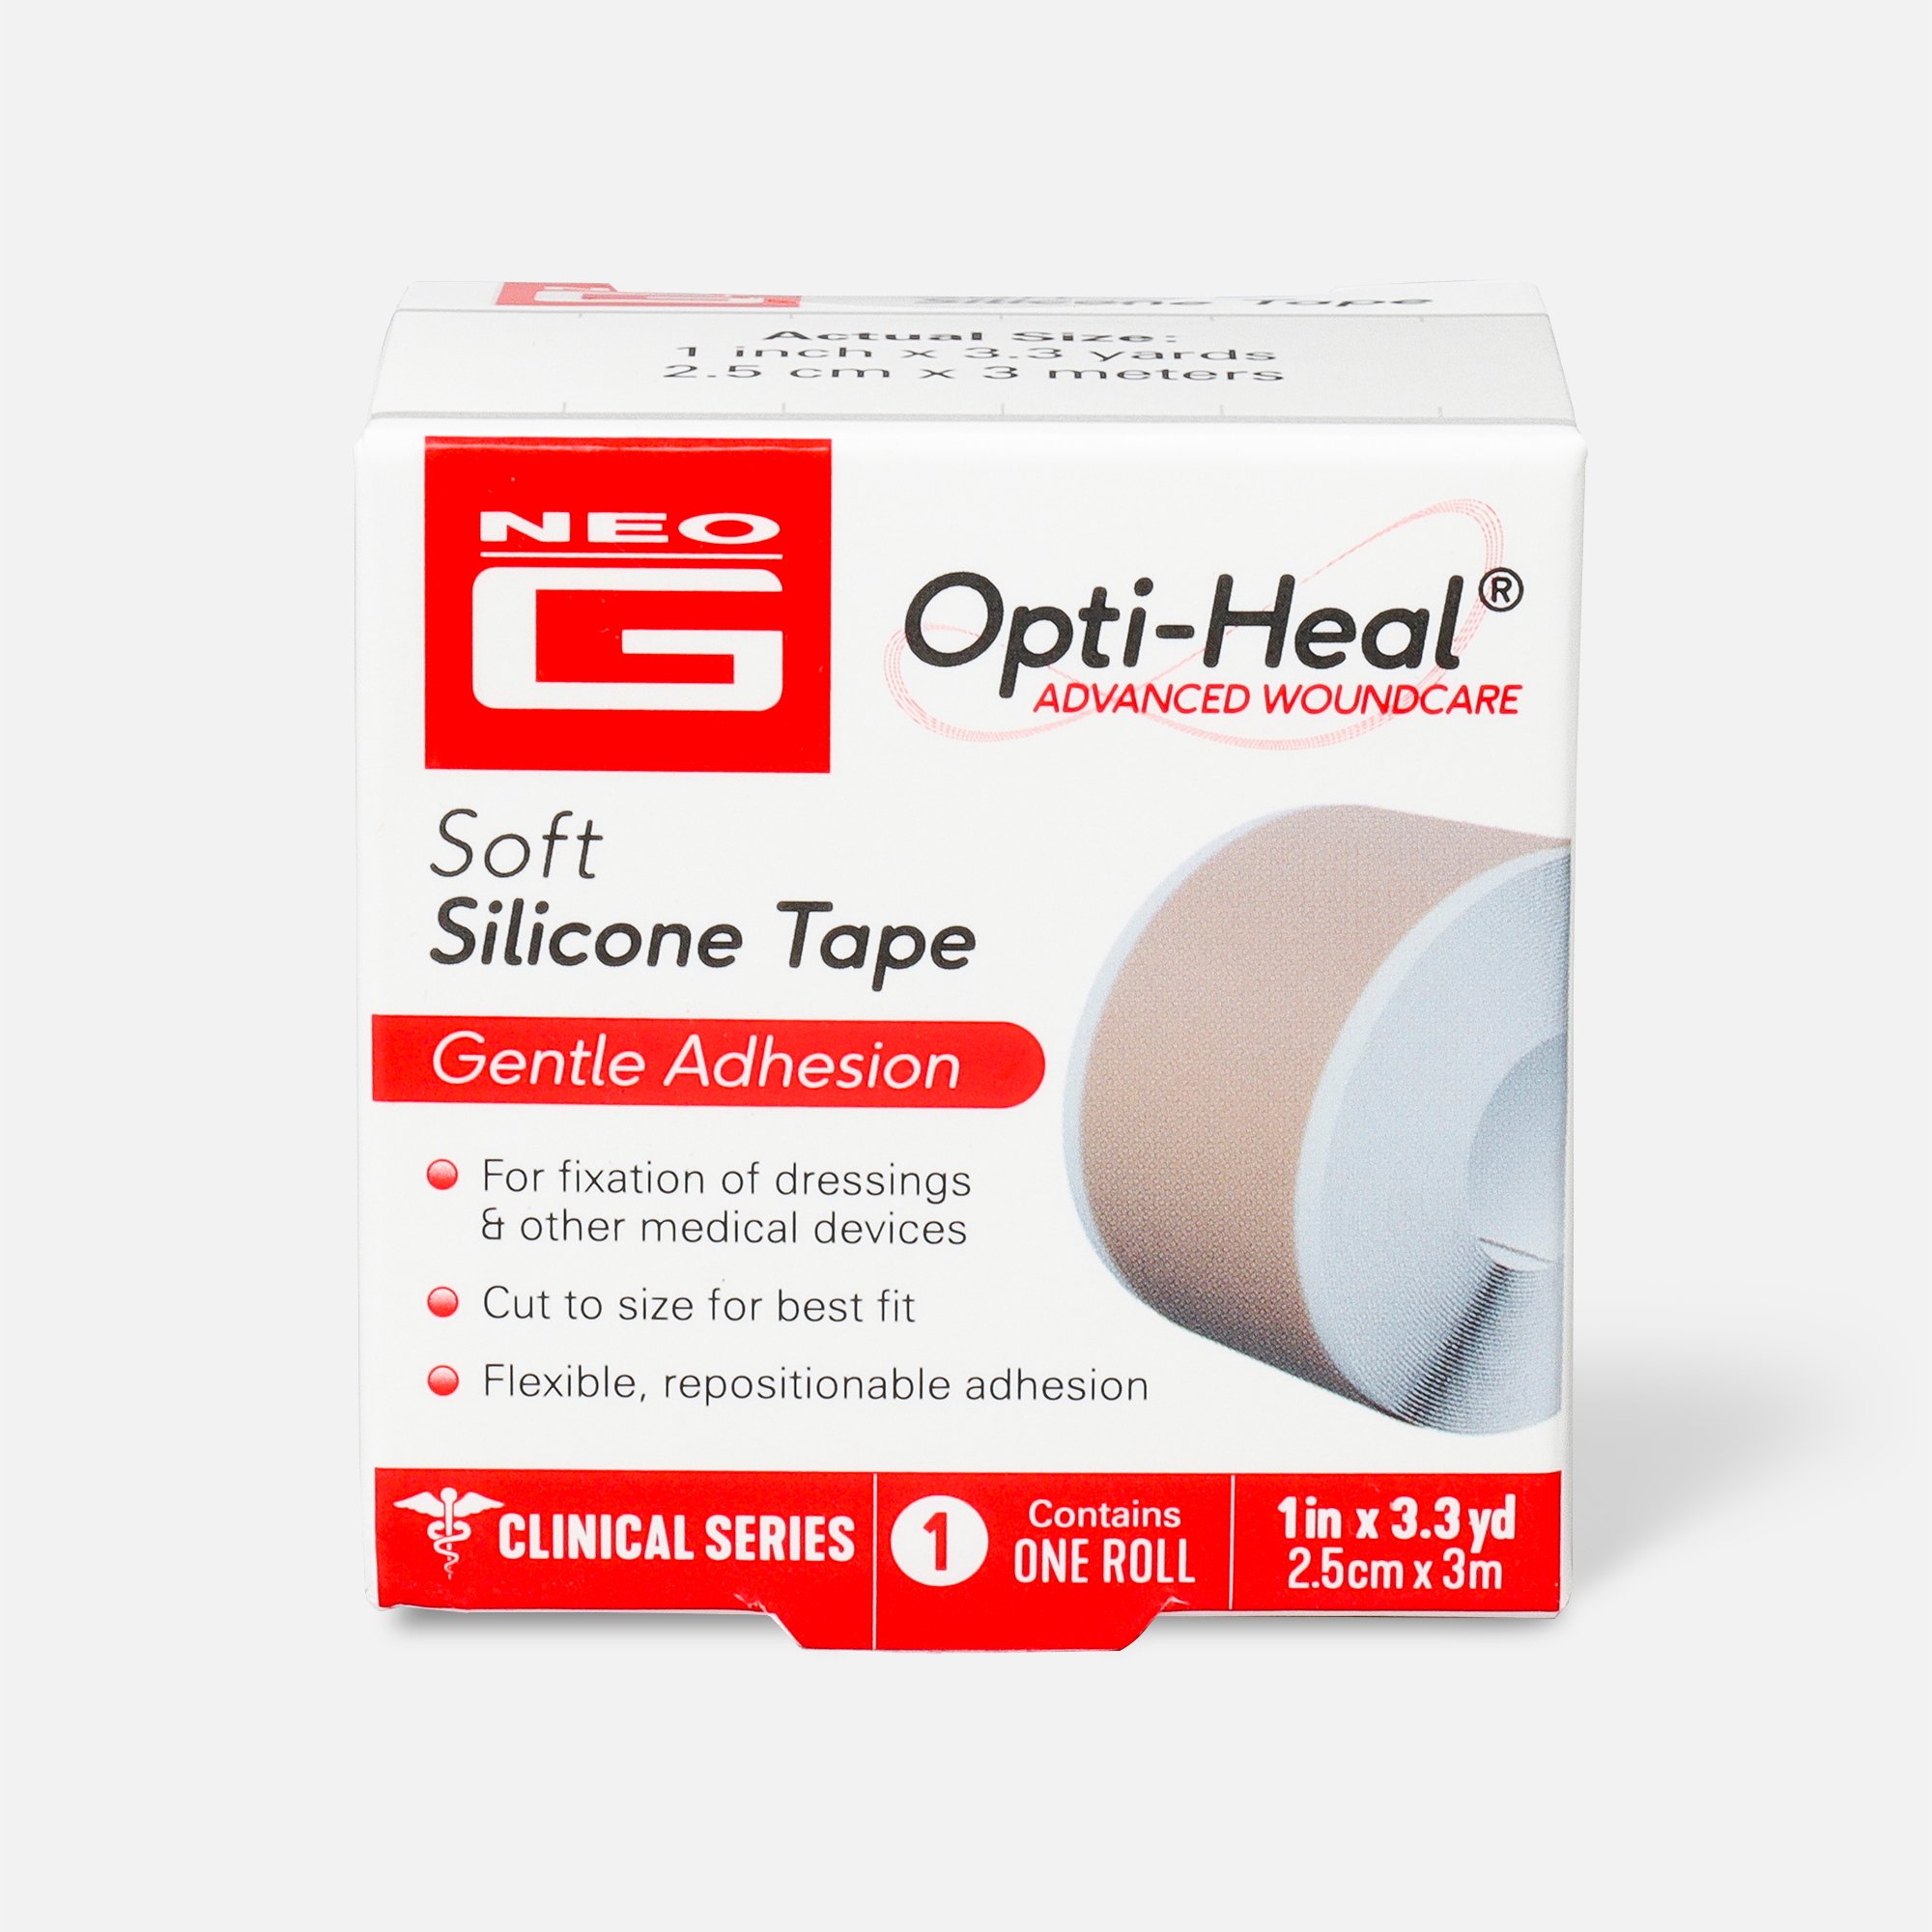 Neo G Soft Silicone Tape, 1 x 3.3 yrd